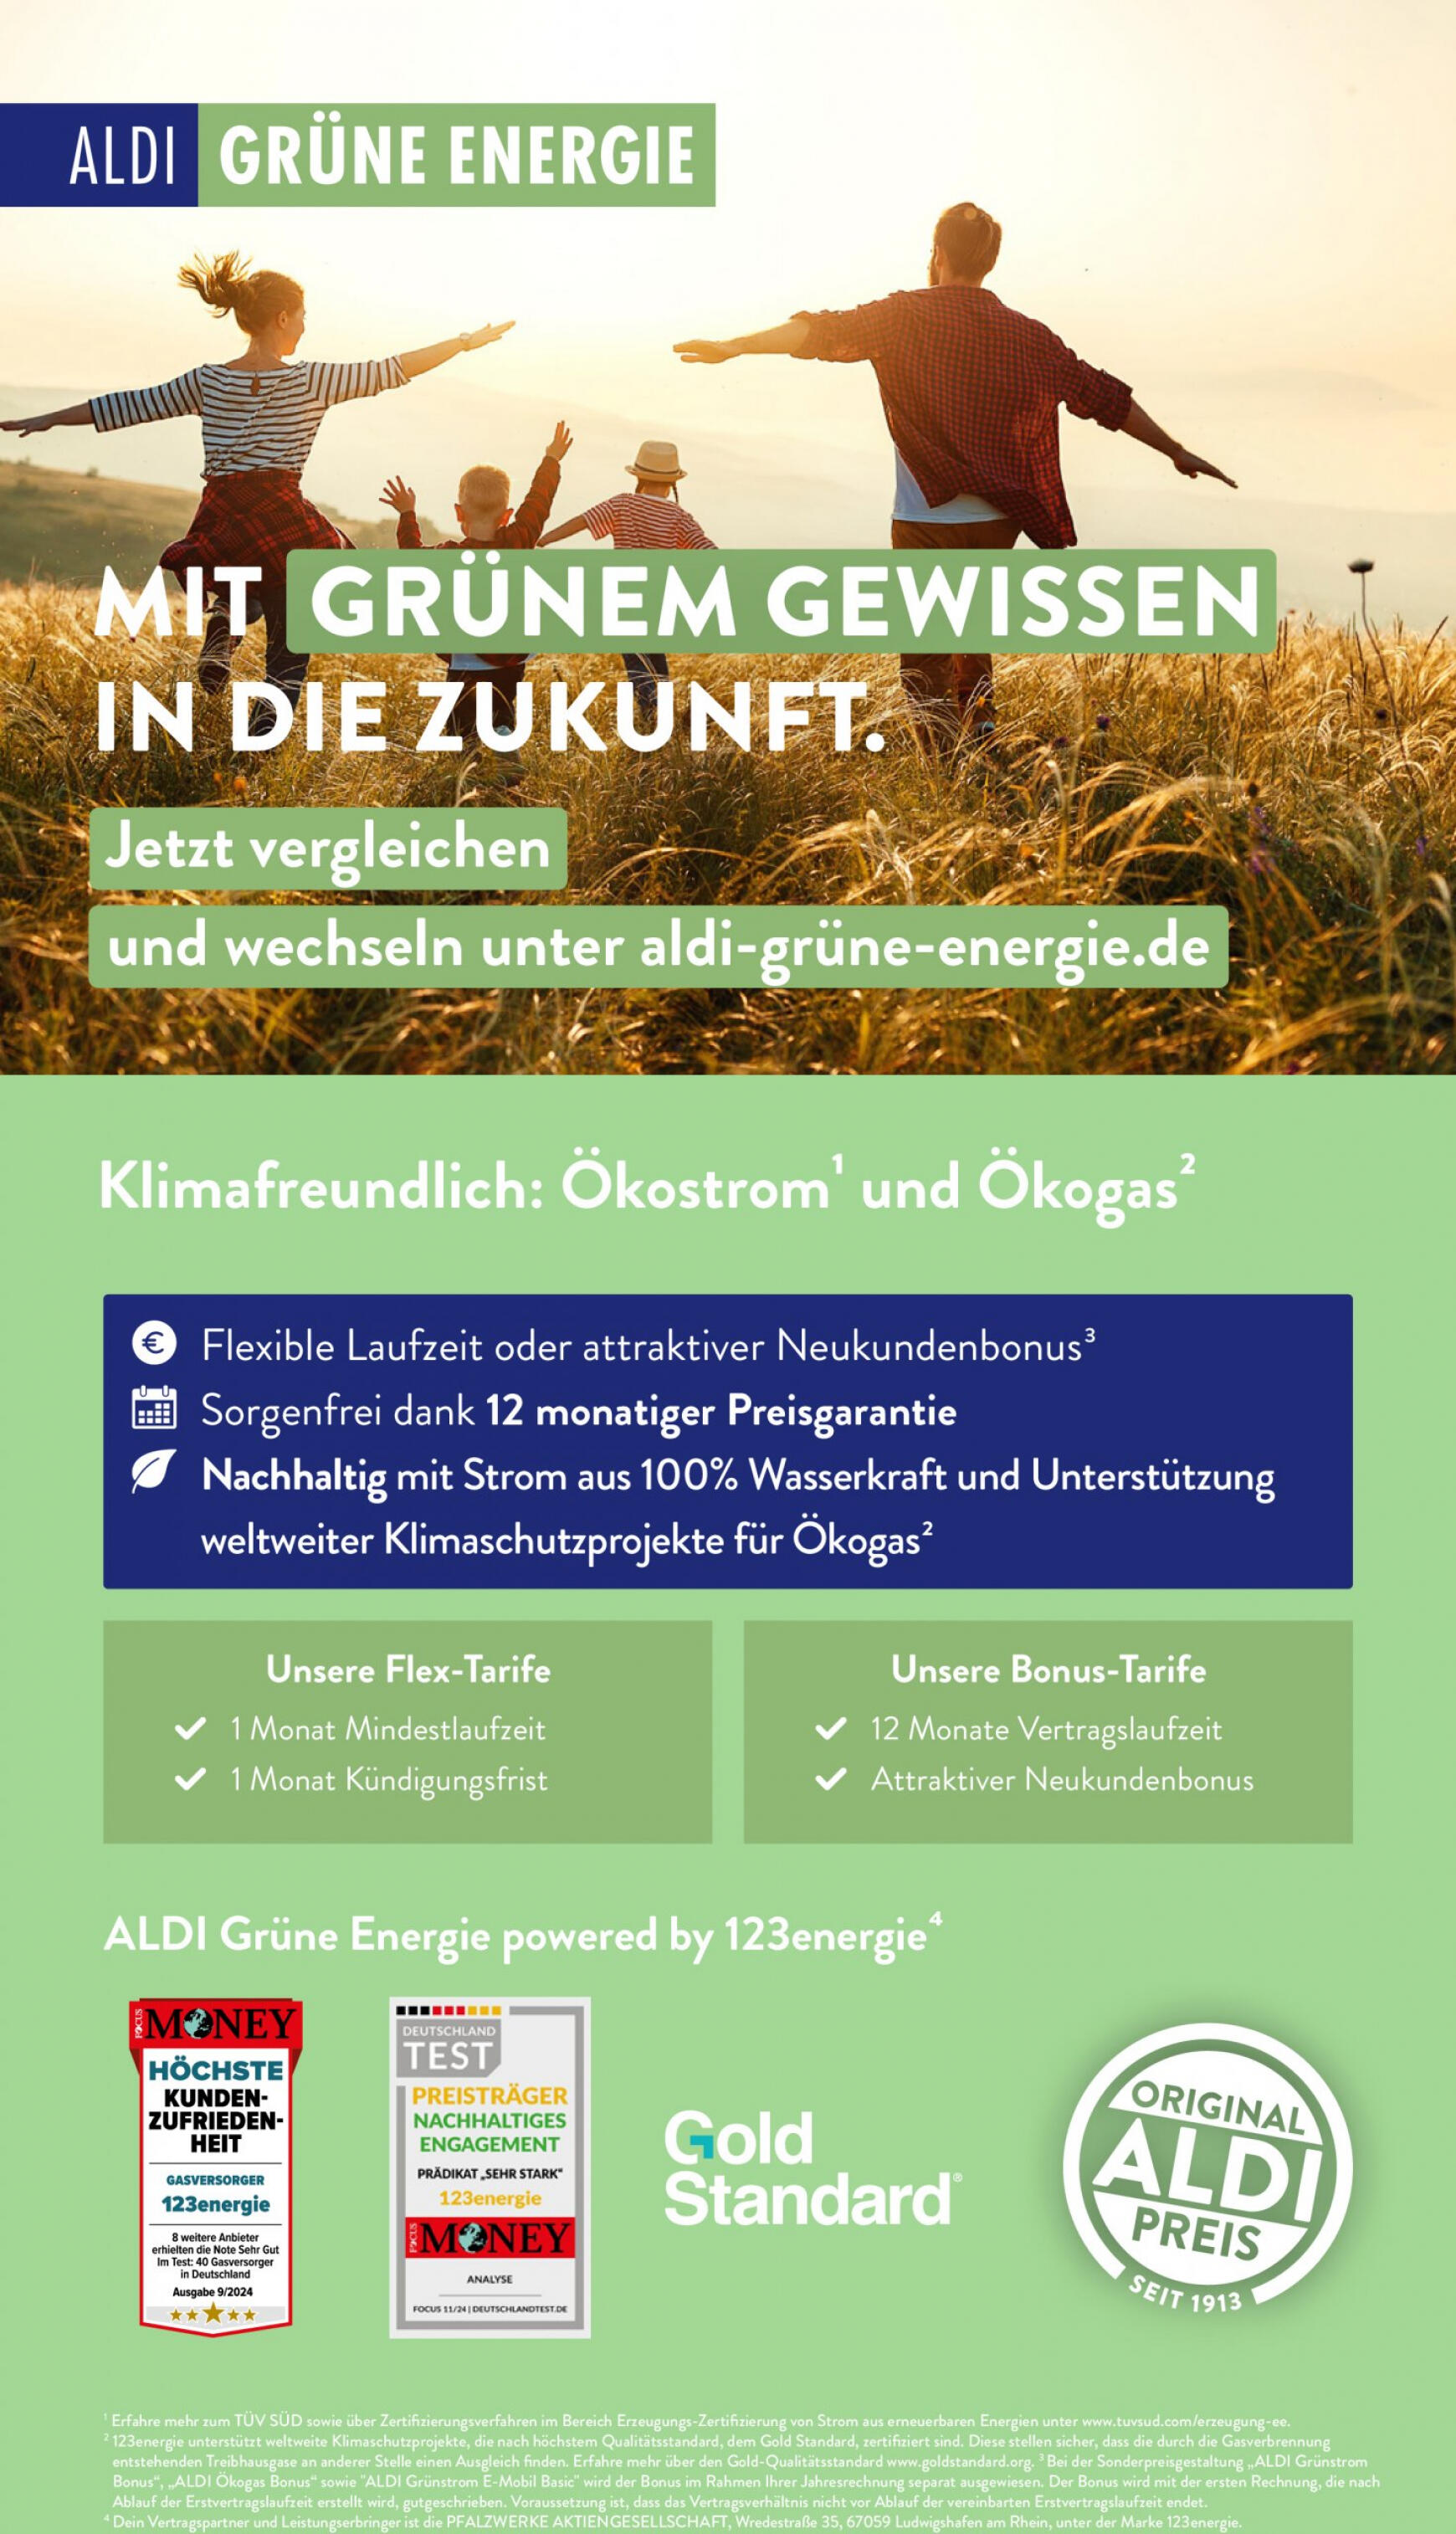 aldi - Flyer ALDI SÜD - Sortimentsprospekt aktuell 01.05. - 31.05. - page: 33